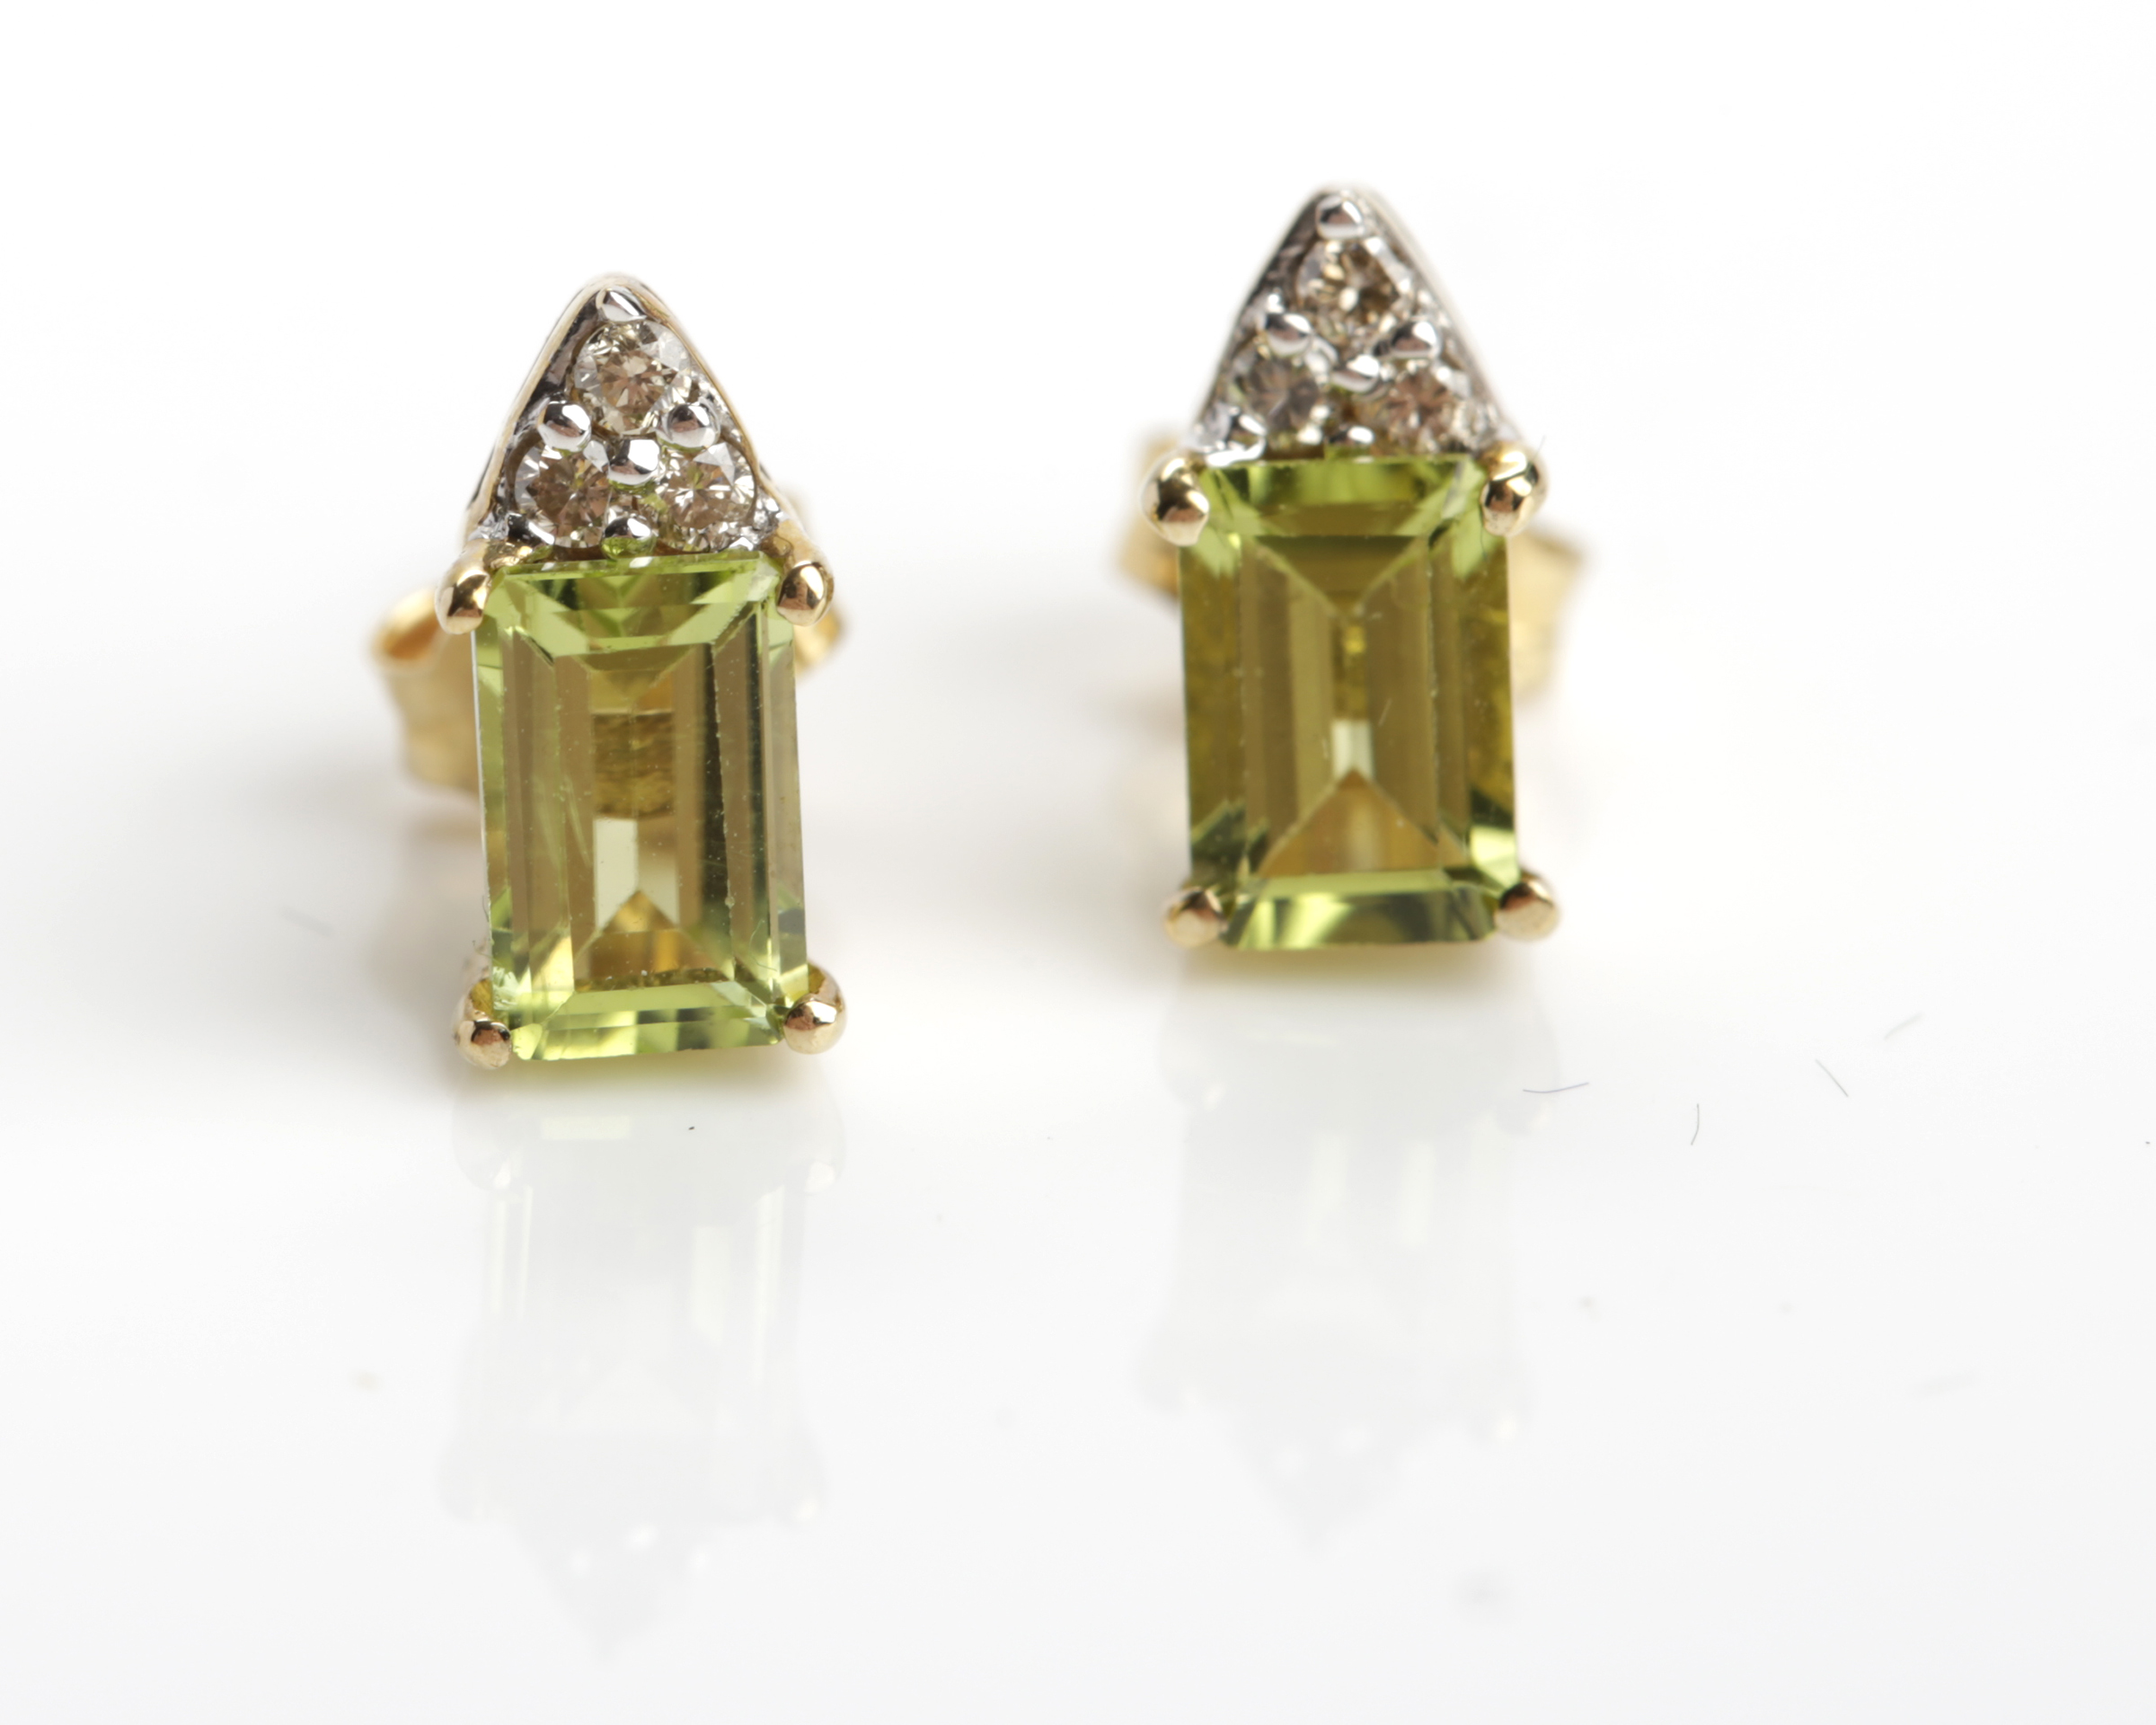 PAIR OF PERIDOT AND DIAMOND STUD EARRINGS each with an emerald cut peridot 6mm x 4mm set below